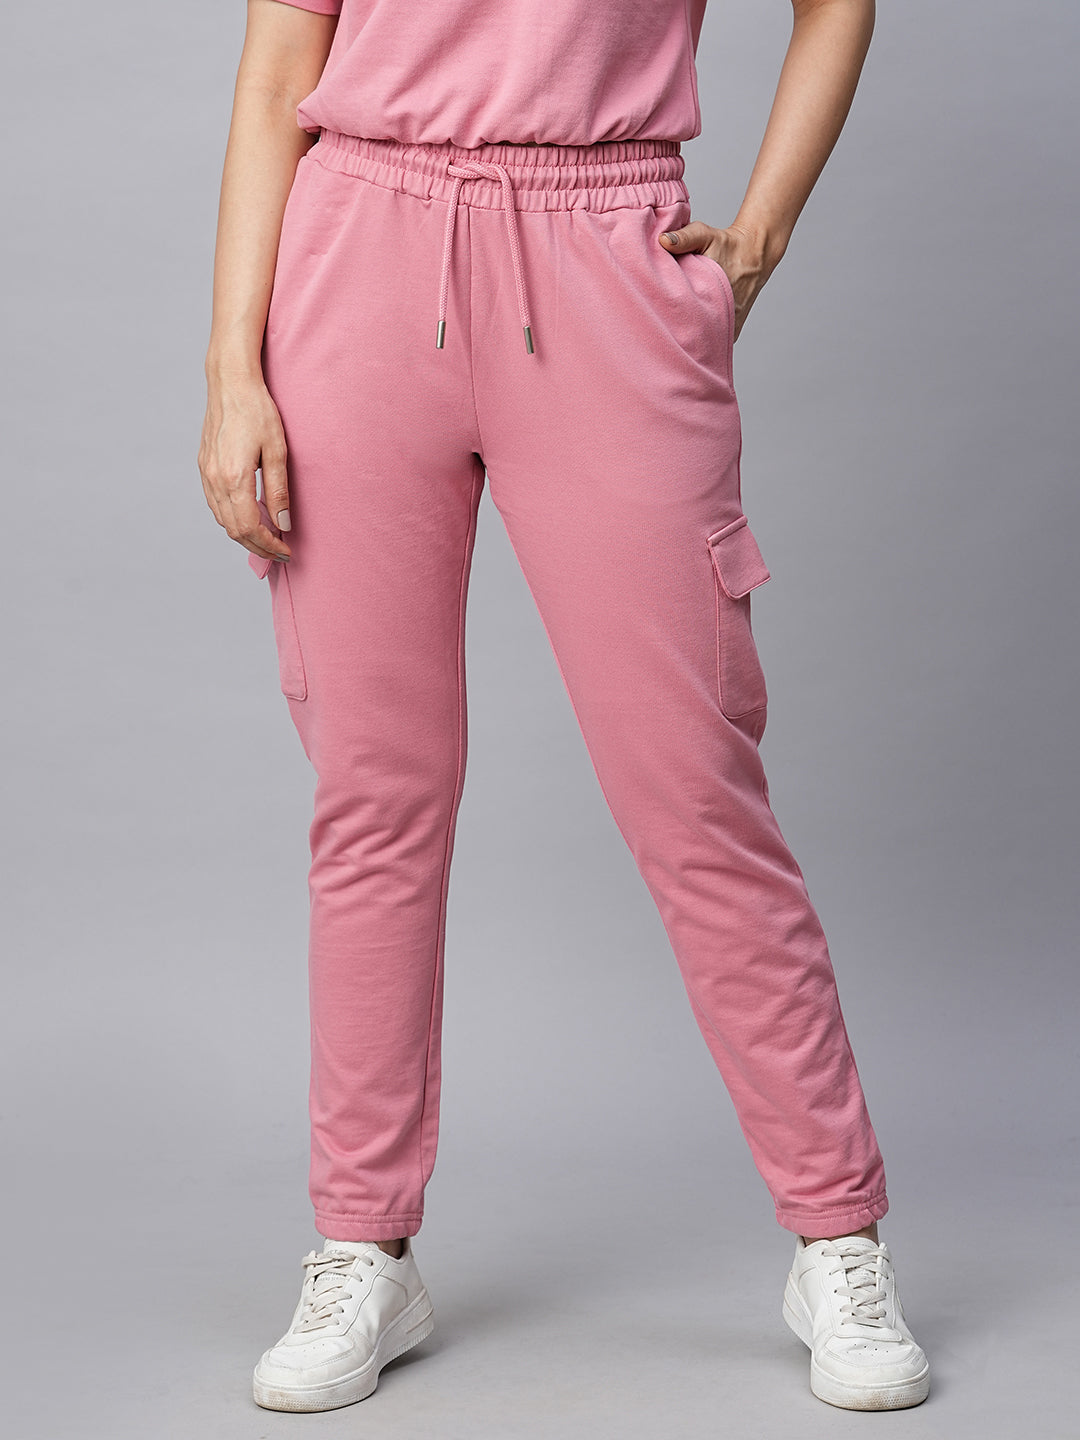 Women's Cotton Pink Regular Fit Kpant